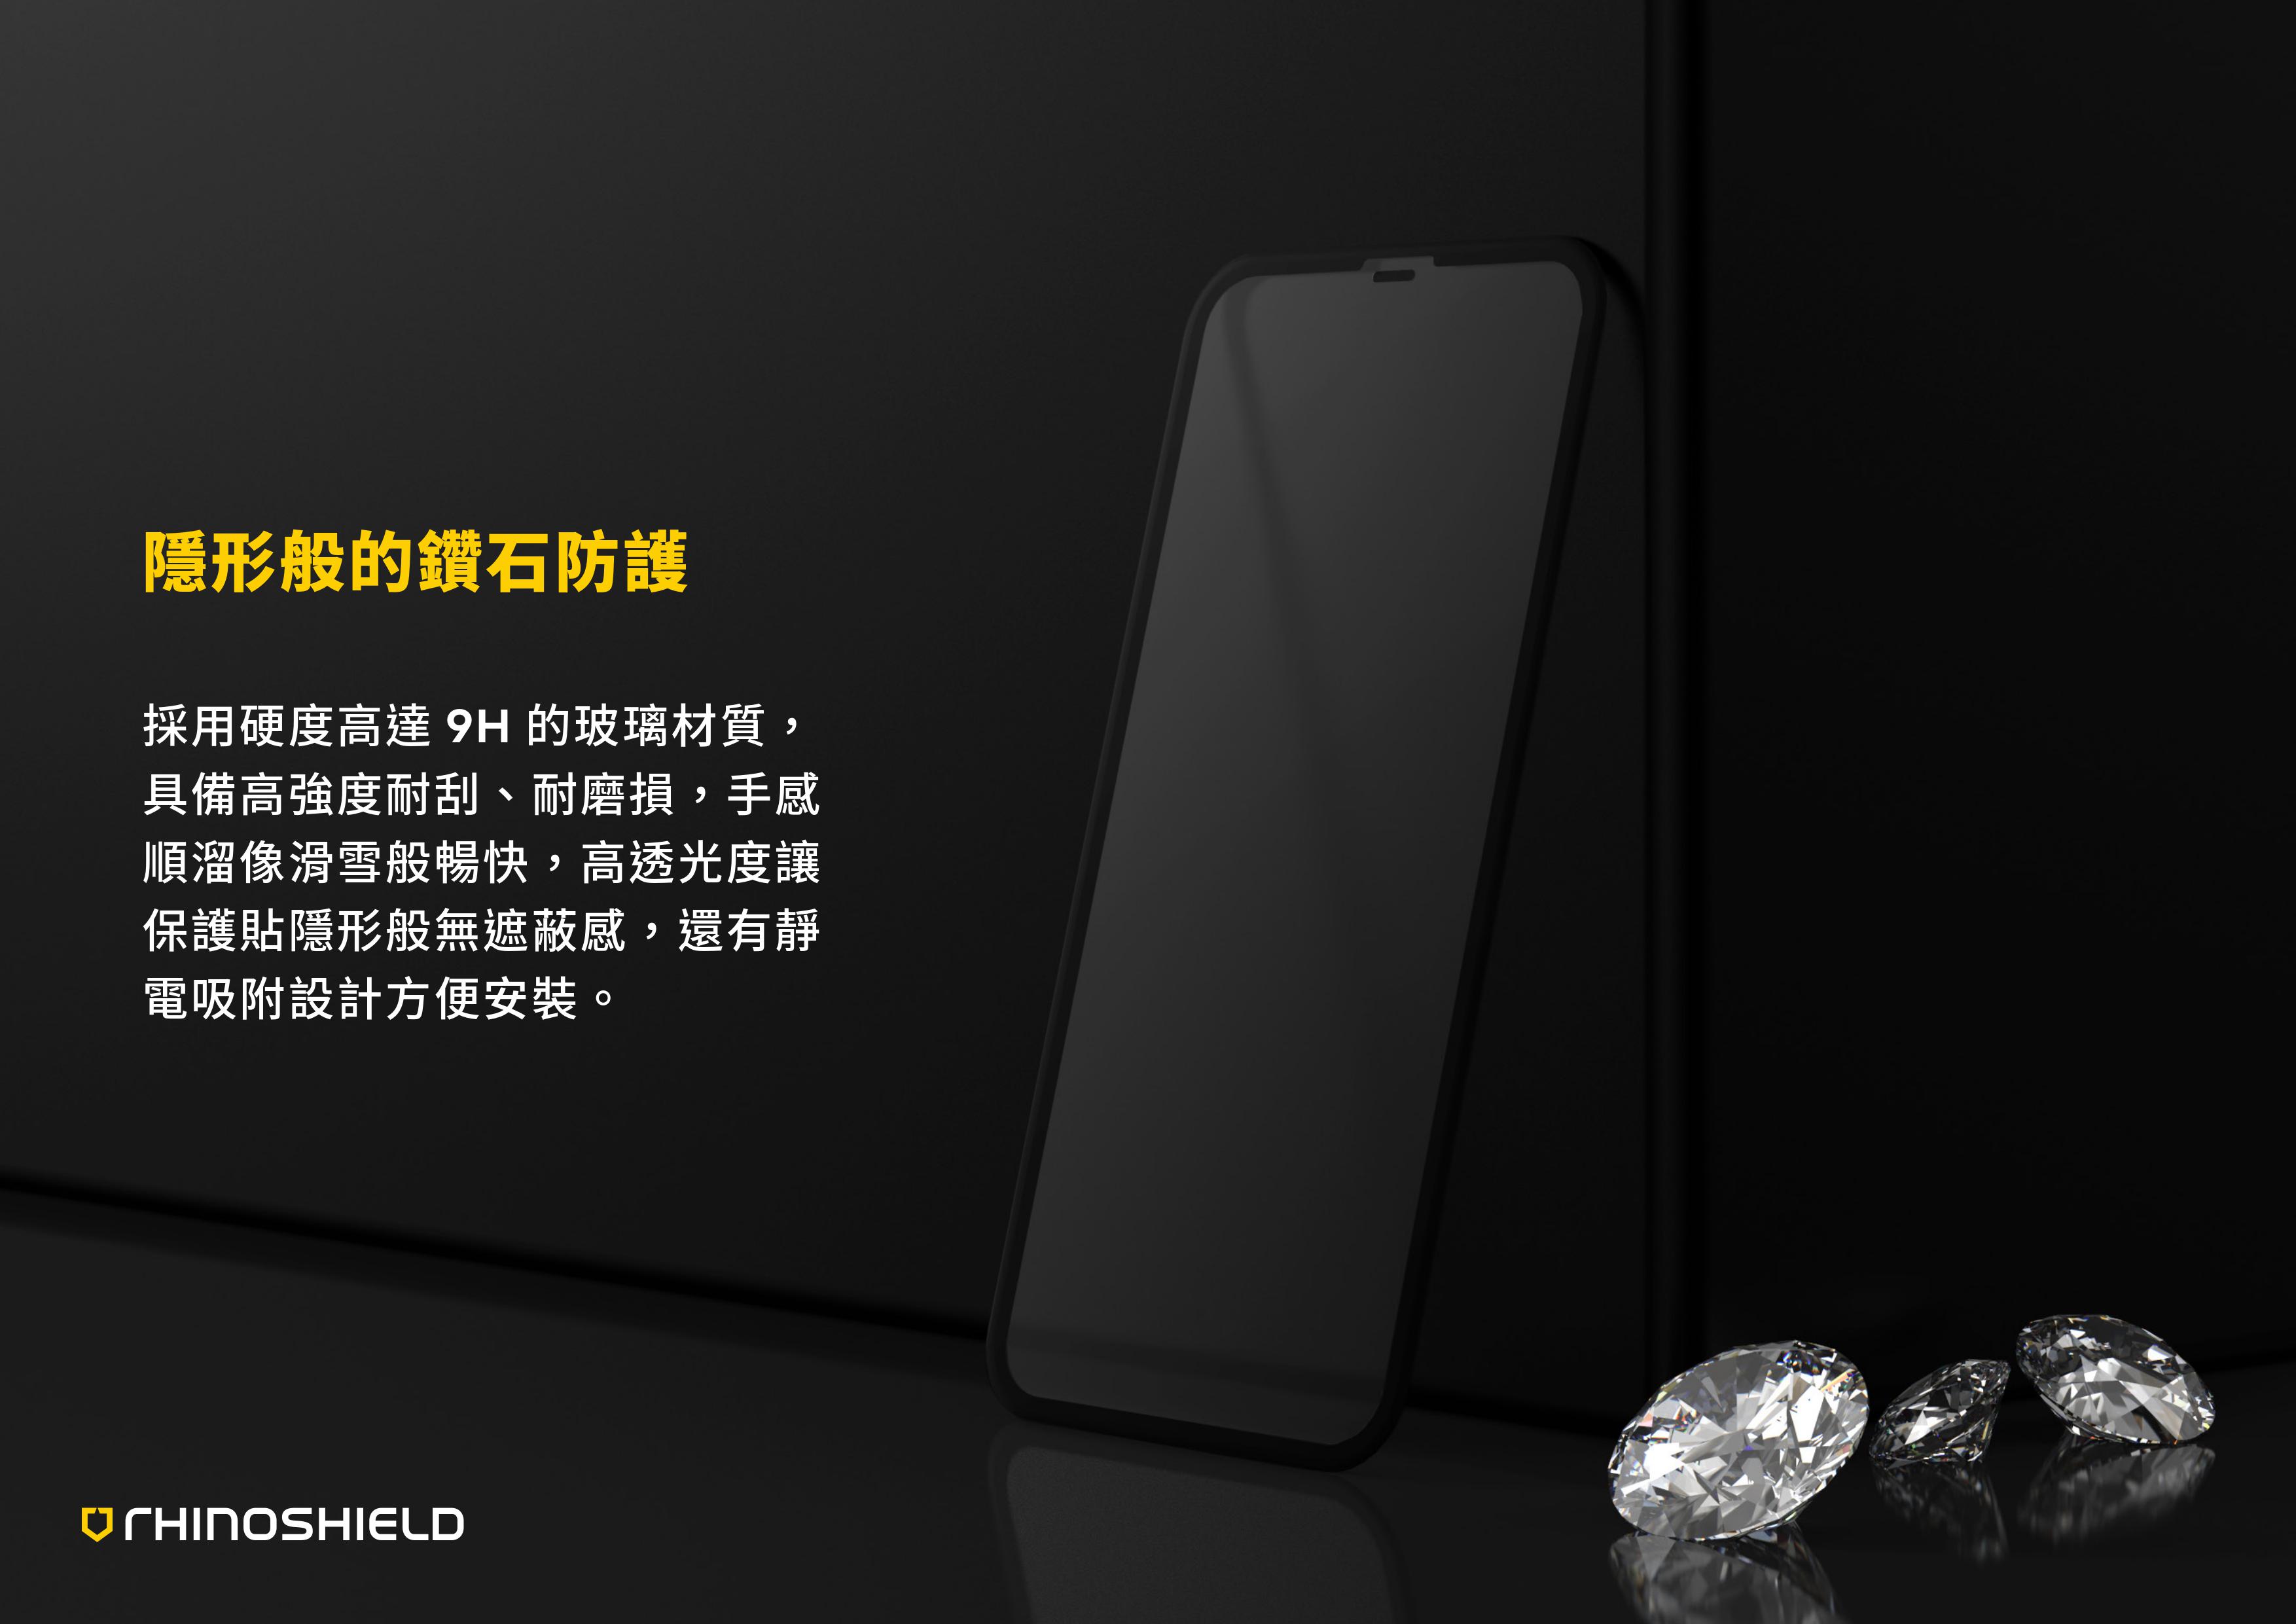 【Rhino Shield 犀牛盾】3D滿版玻璃保護貼(iPhone12、iPhone11)